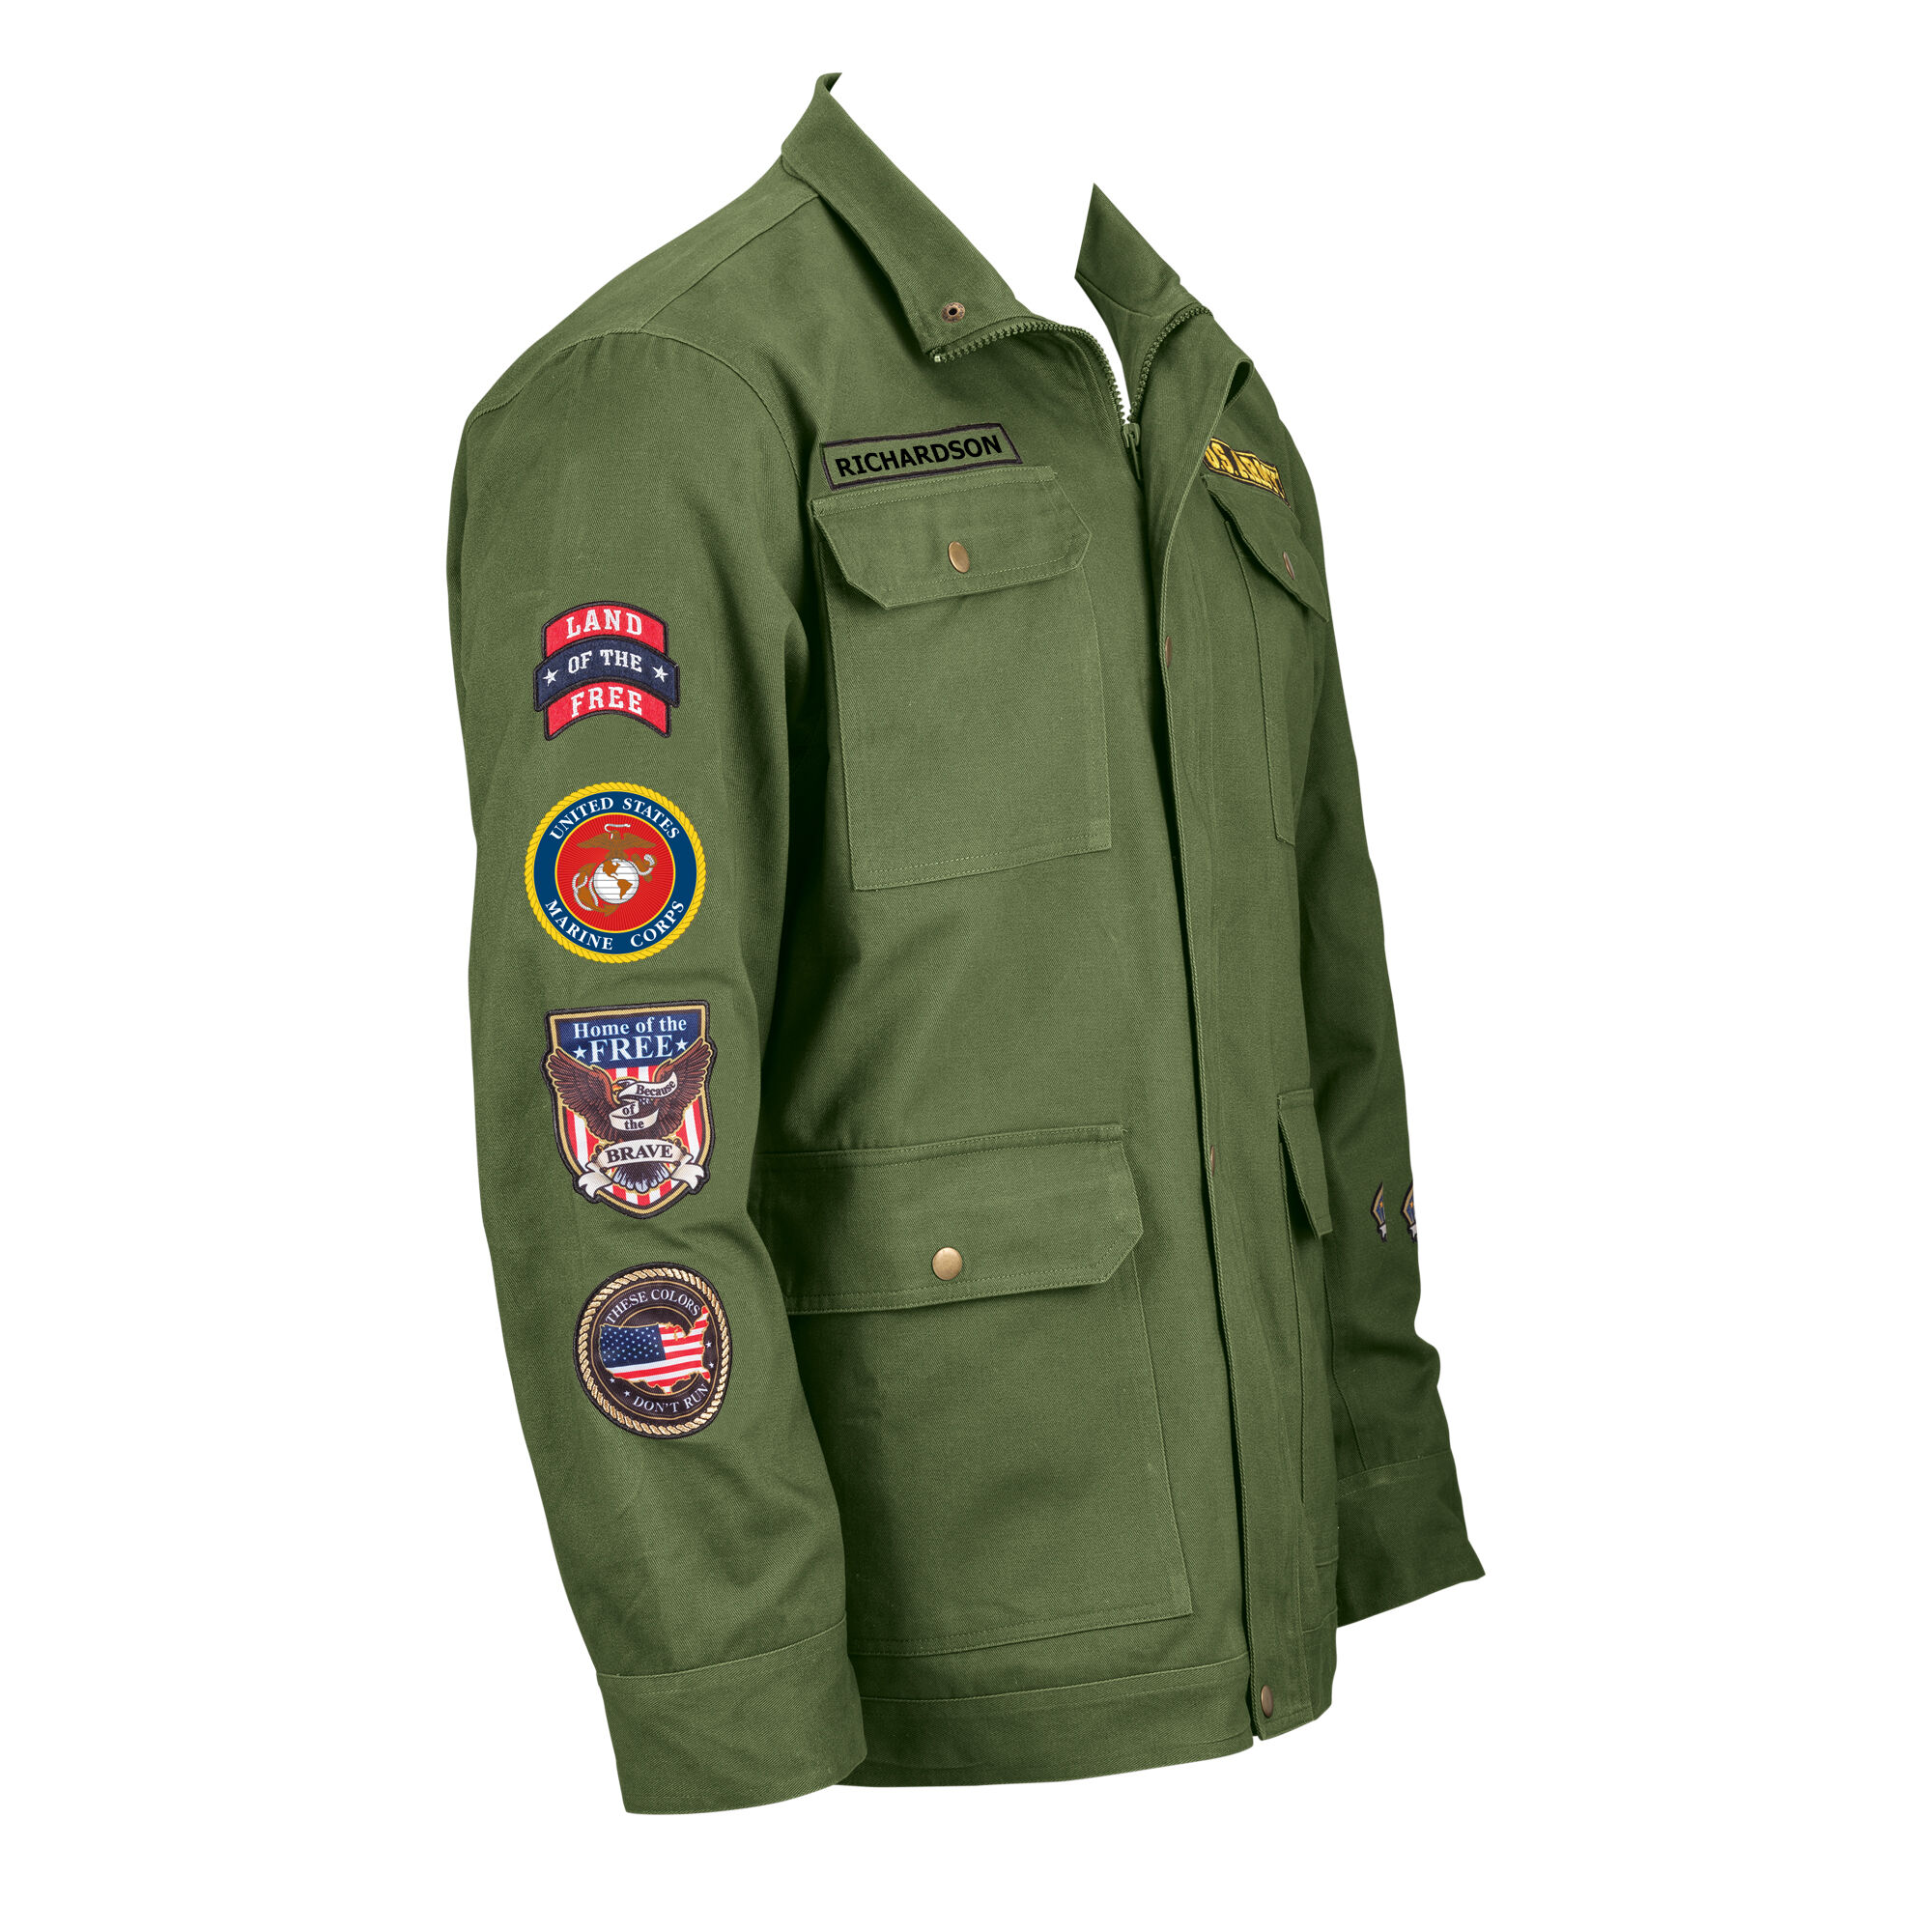 The U.S. Marines Field Jacket